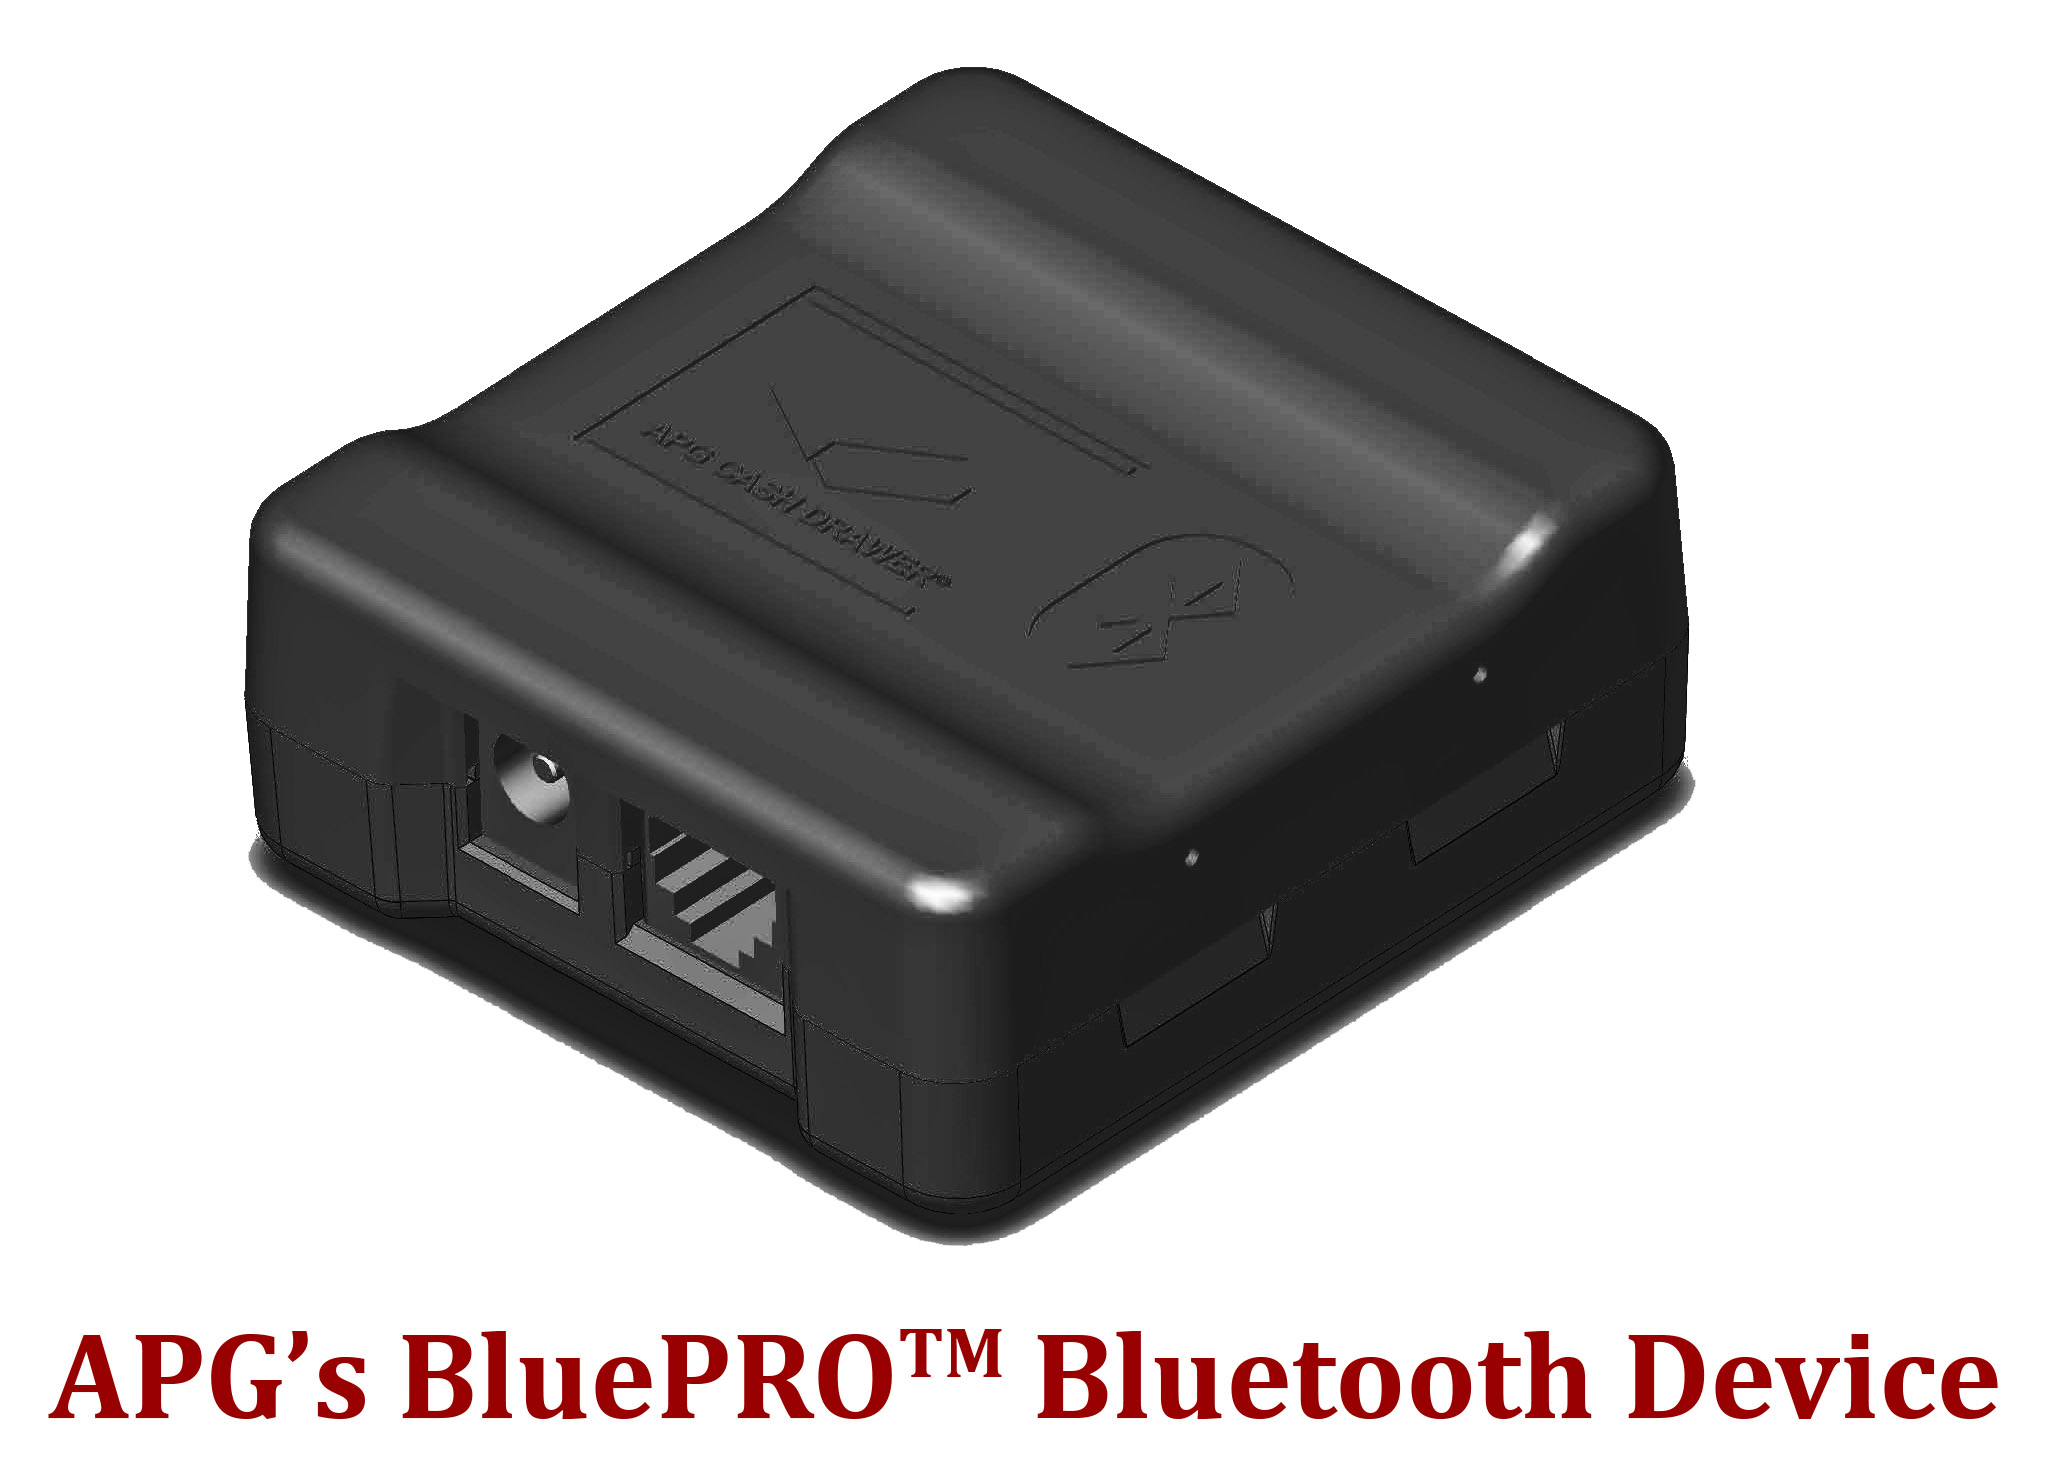 APG's BluePRO Bluetooth Device